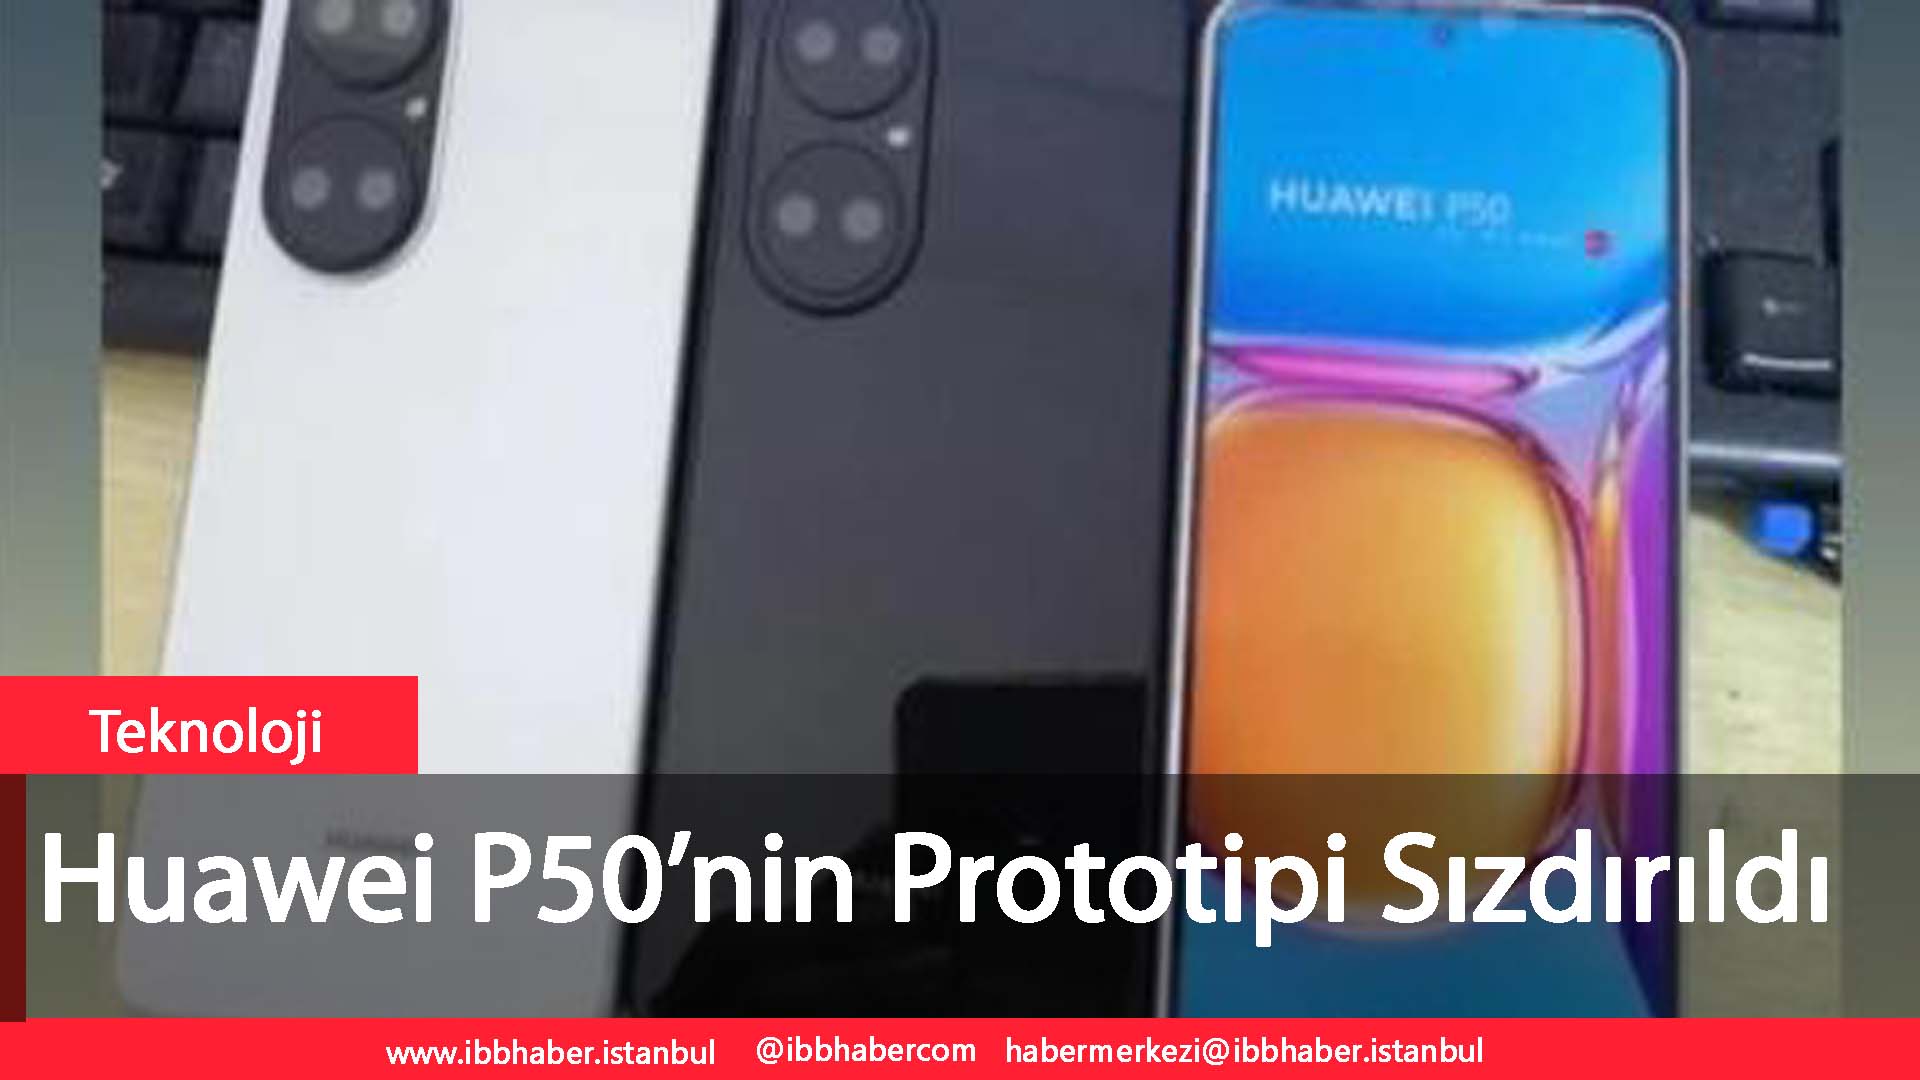 Huawei P50’nin Prototipi Sızdırıldı